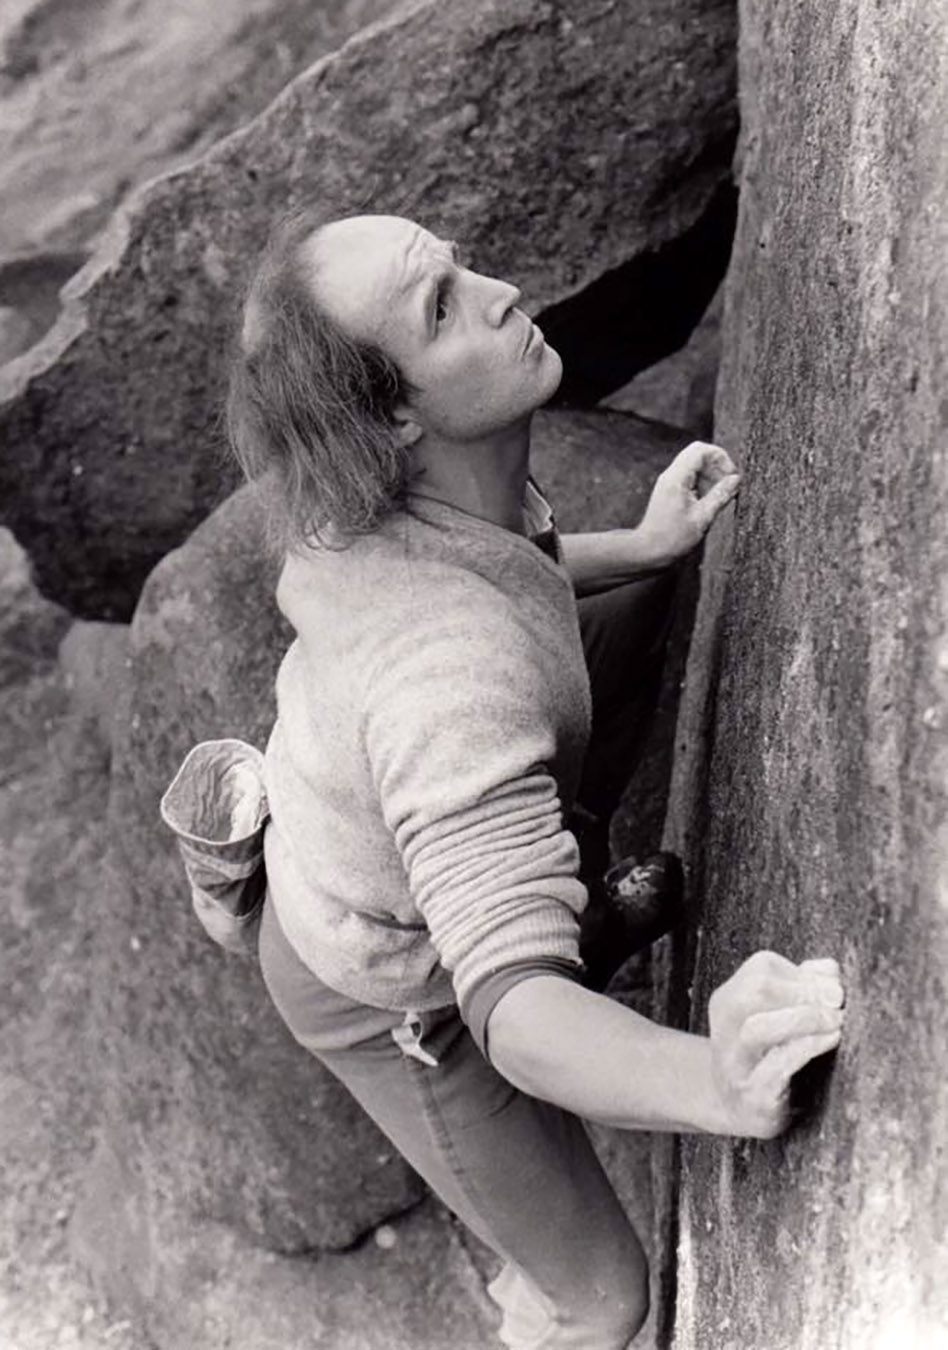 John bouldering at Burbage South in 1986. Photo: © John Kirk